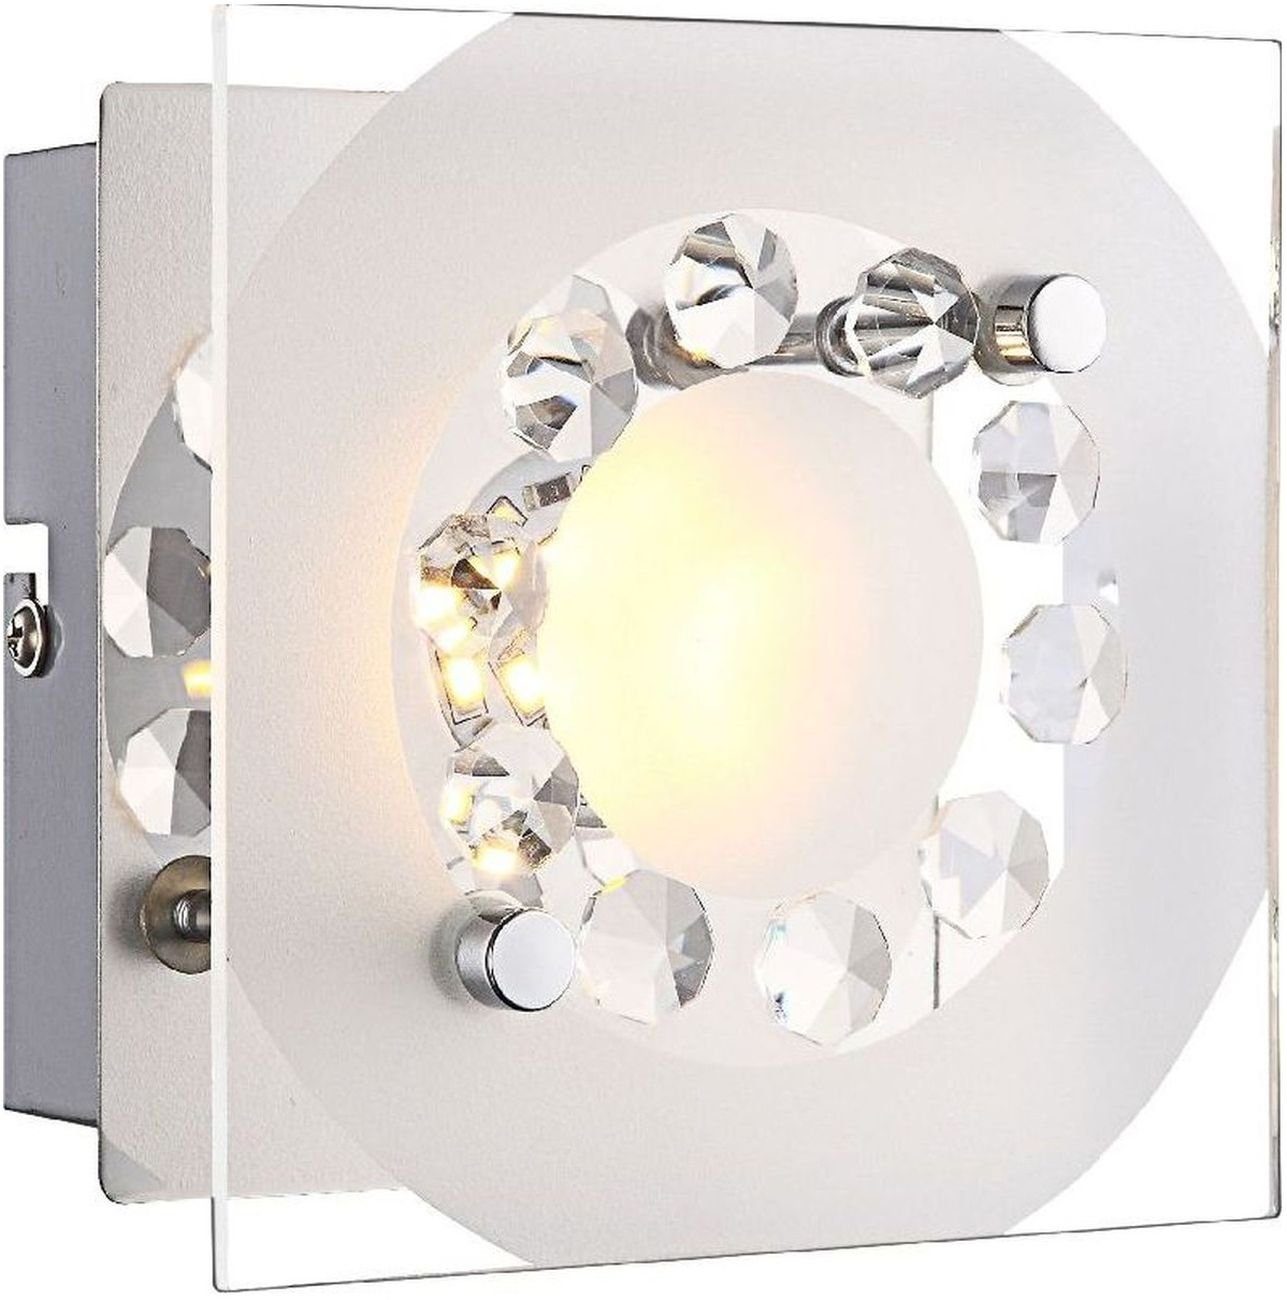 GLOBO Deckenlampe LED Wandleuchte Deckenleuchte Deckenleuchte Wandlampe Globo Wohnzimmer